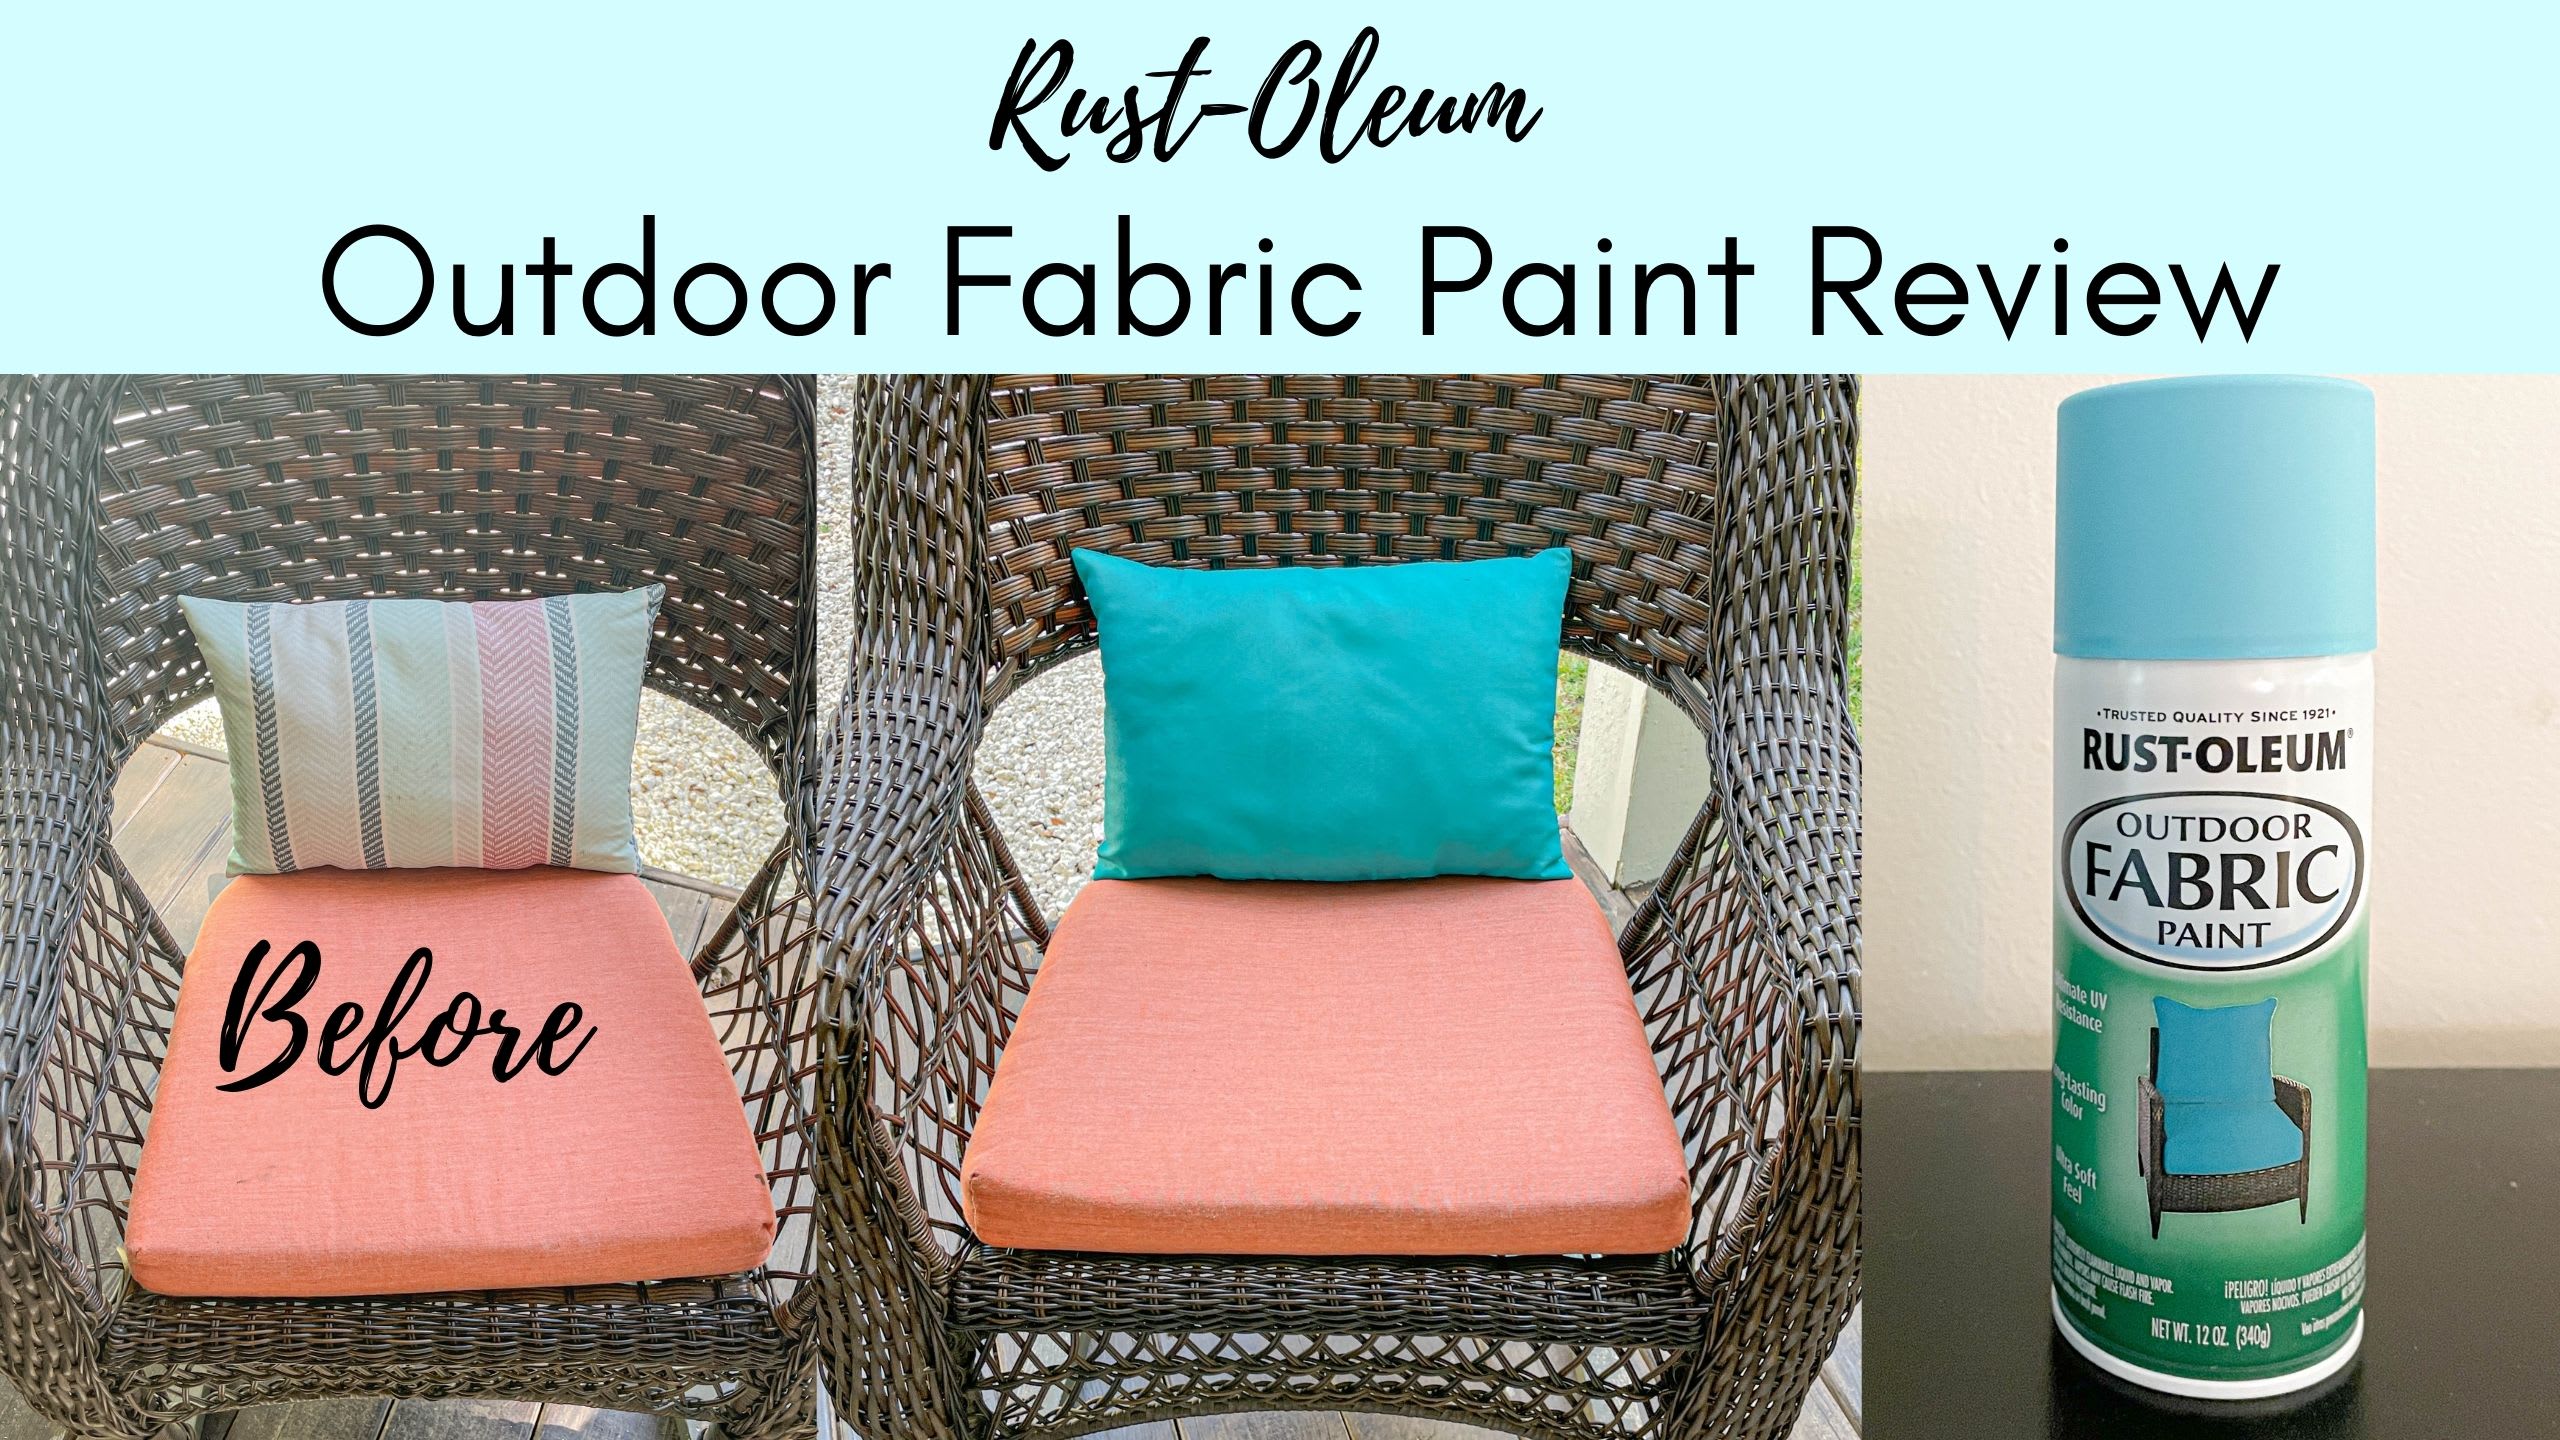 Rustoleum Outdoor Fabric Paint review